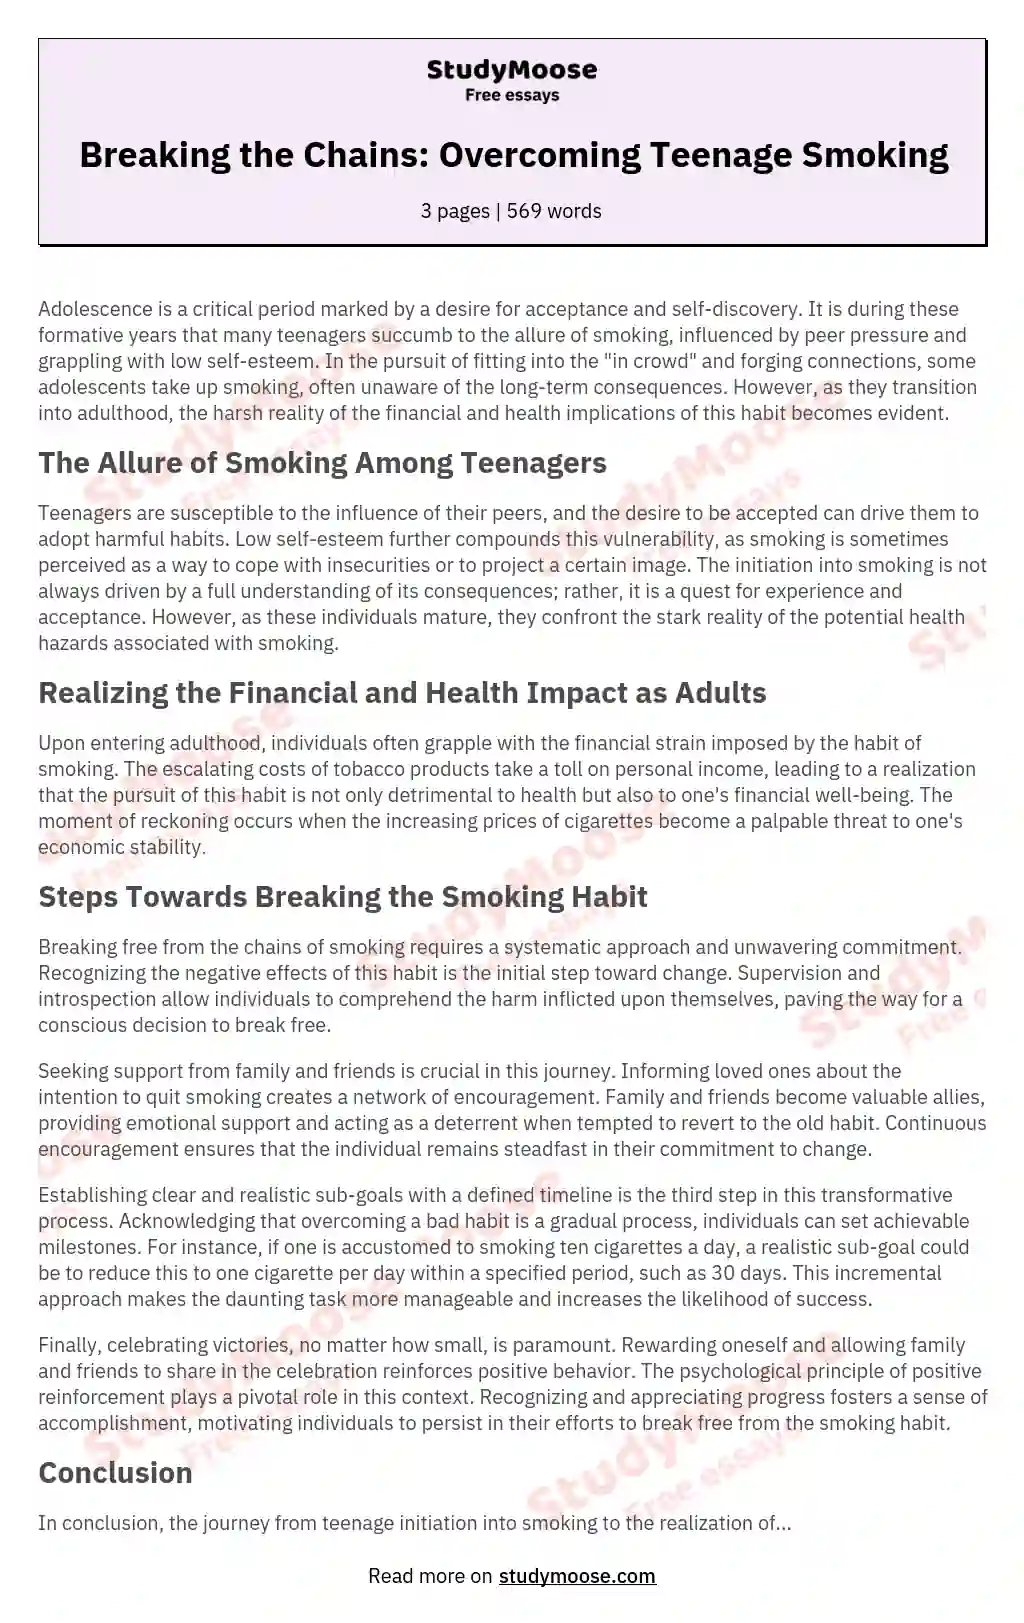 Breaking the Chains: Overcoming Teenage Smoking essay